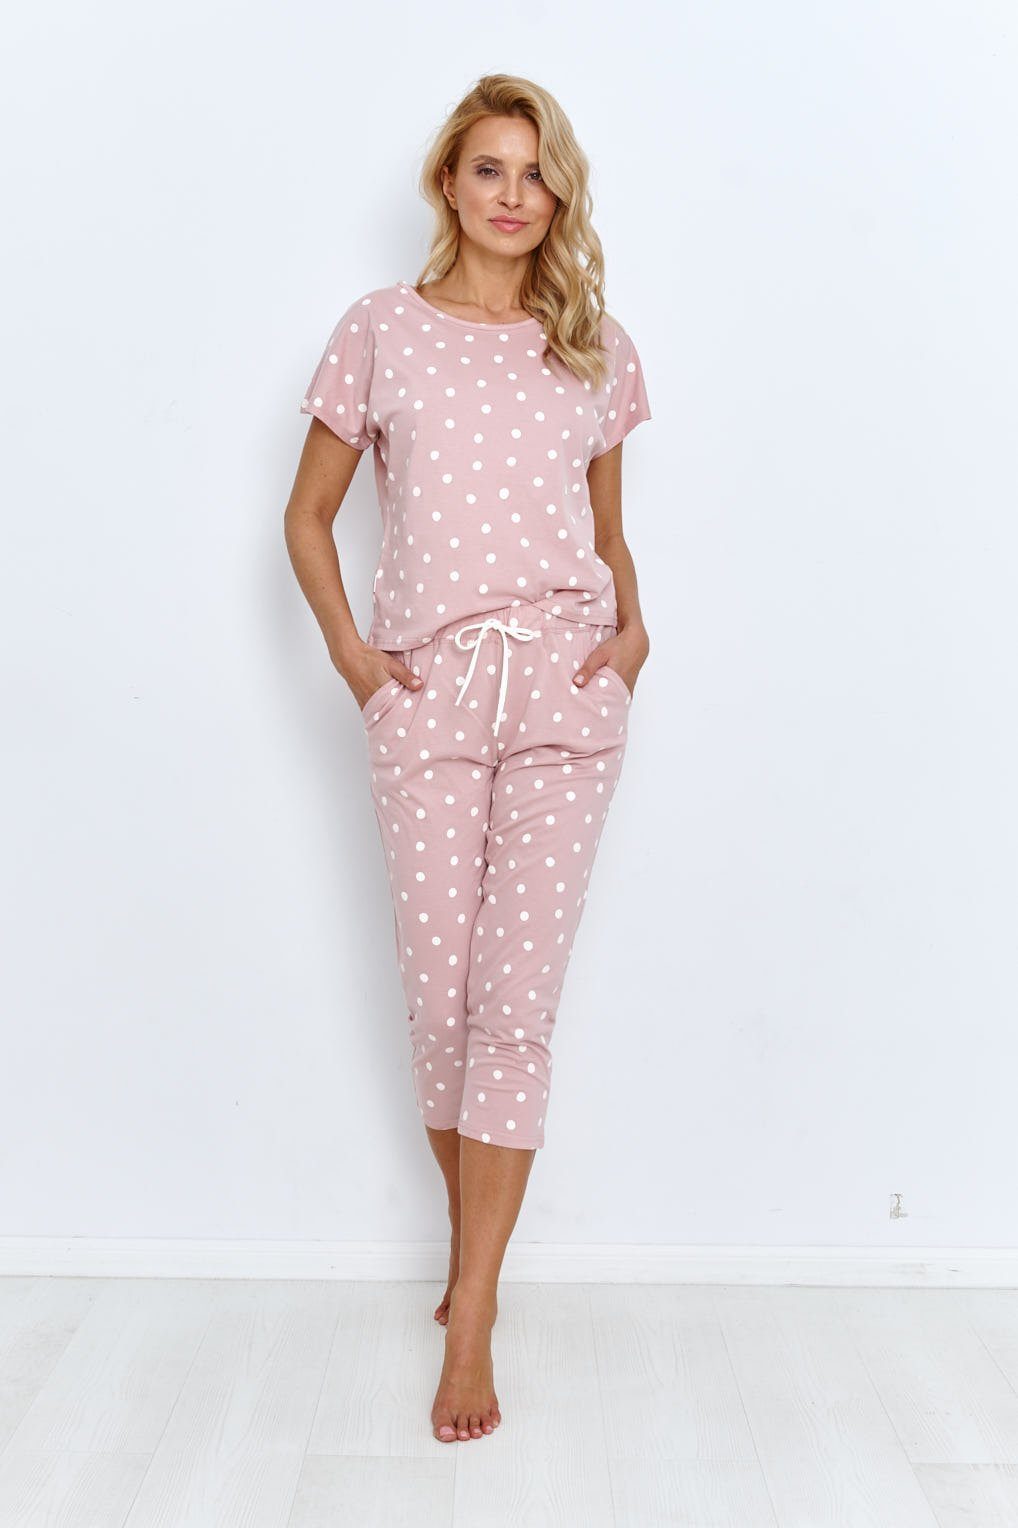 YARNS YARNS Capri-Pyjama 3/4-Schlafanzug altrosa tlg., in Stück) (2 DREAMY DREAMY mit Punkten 1